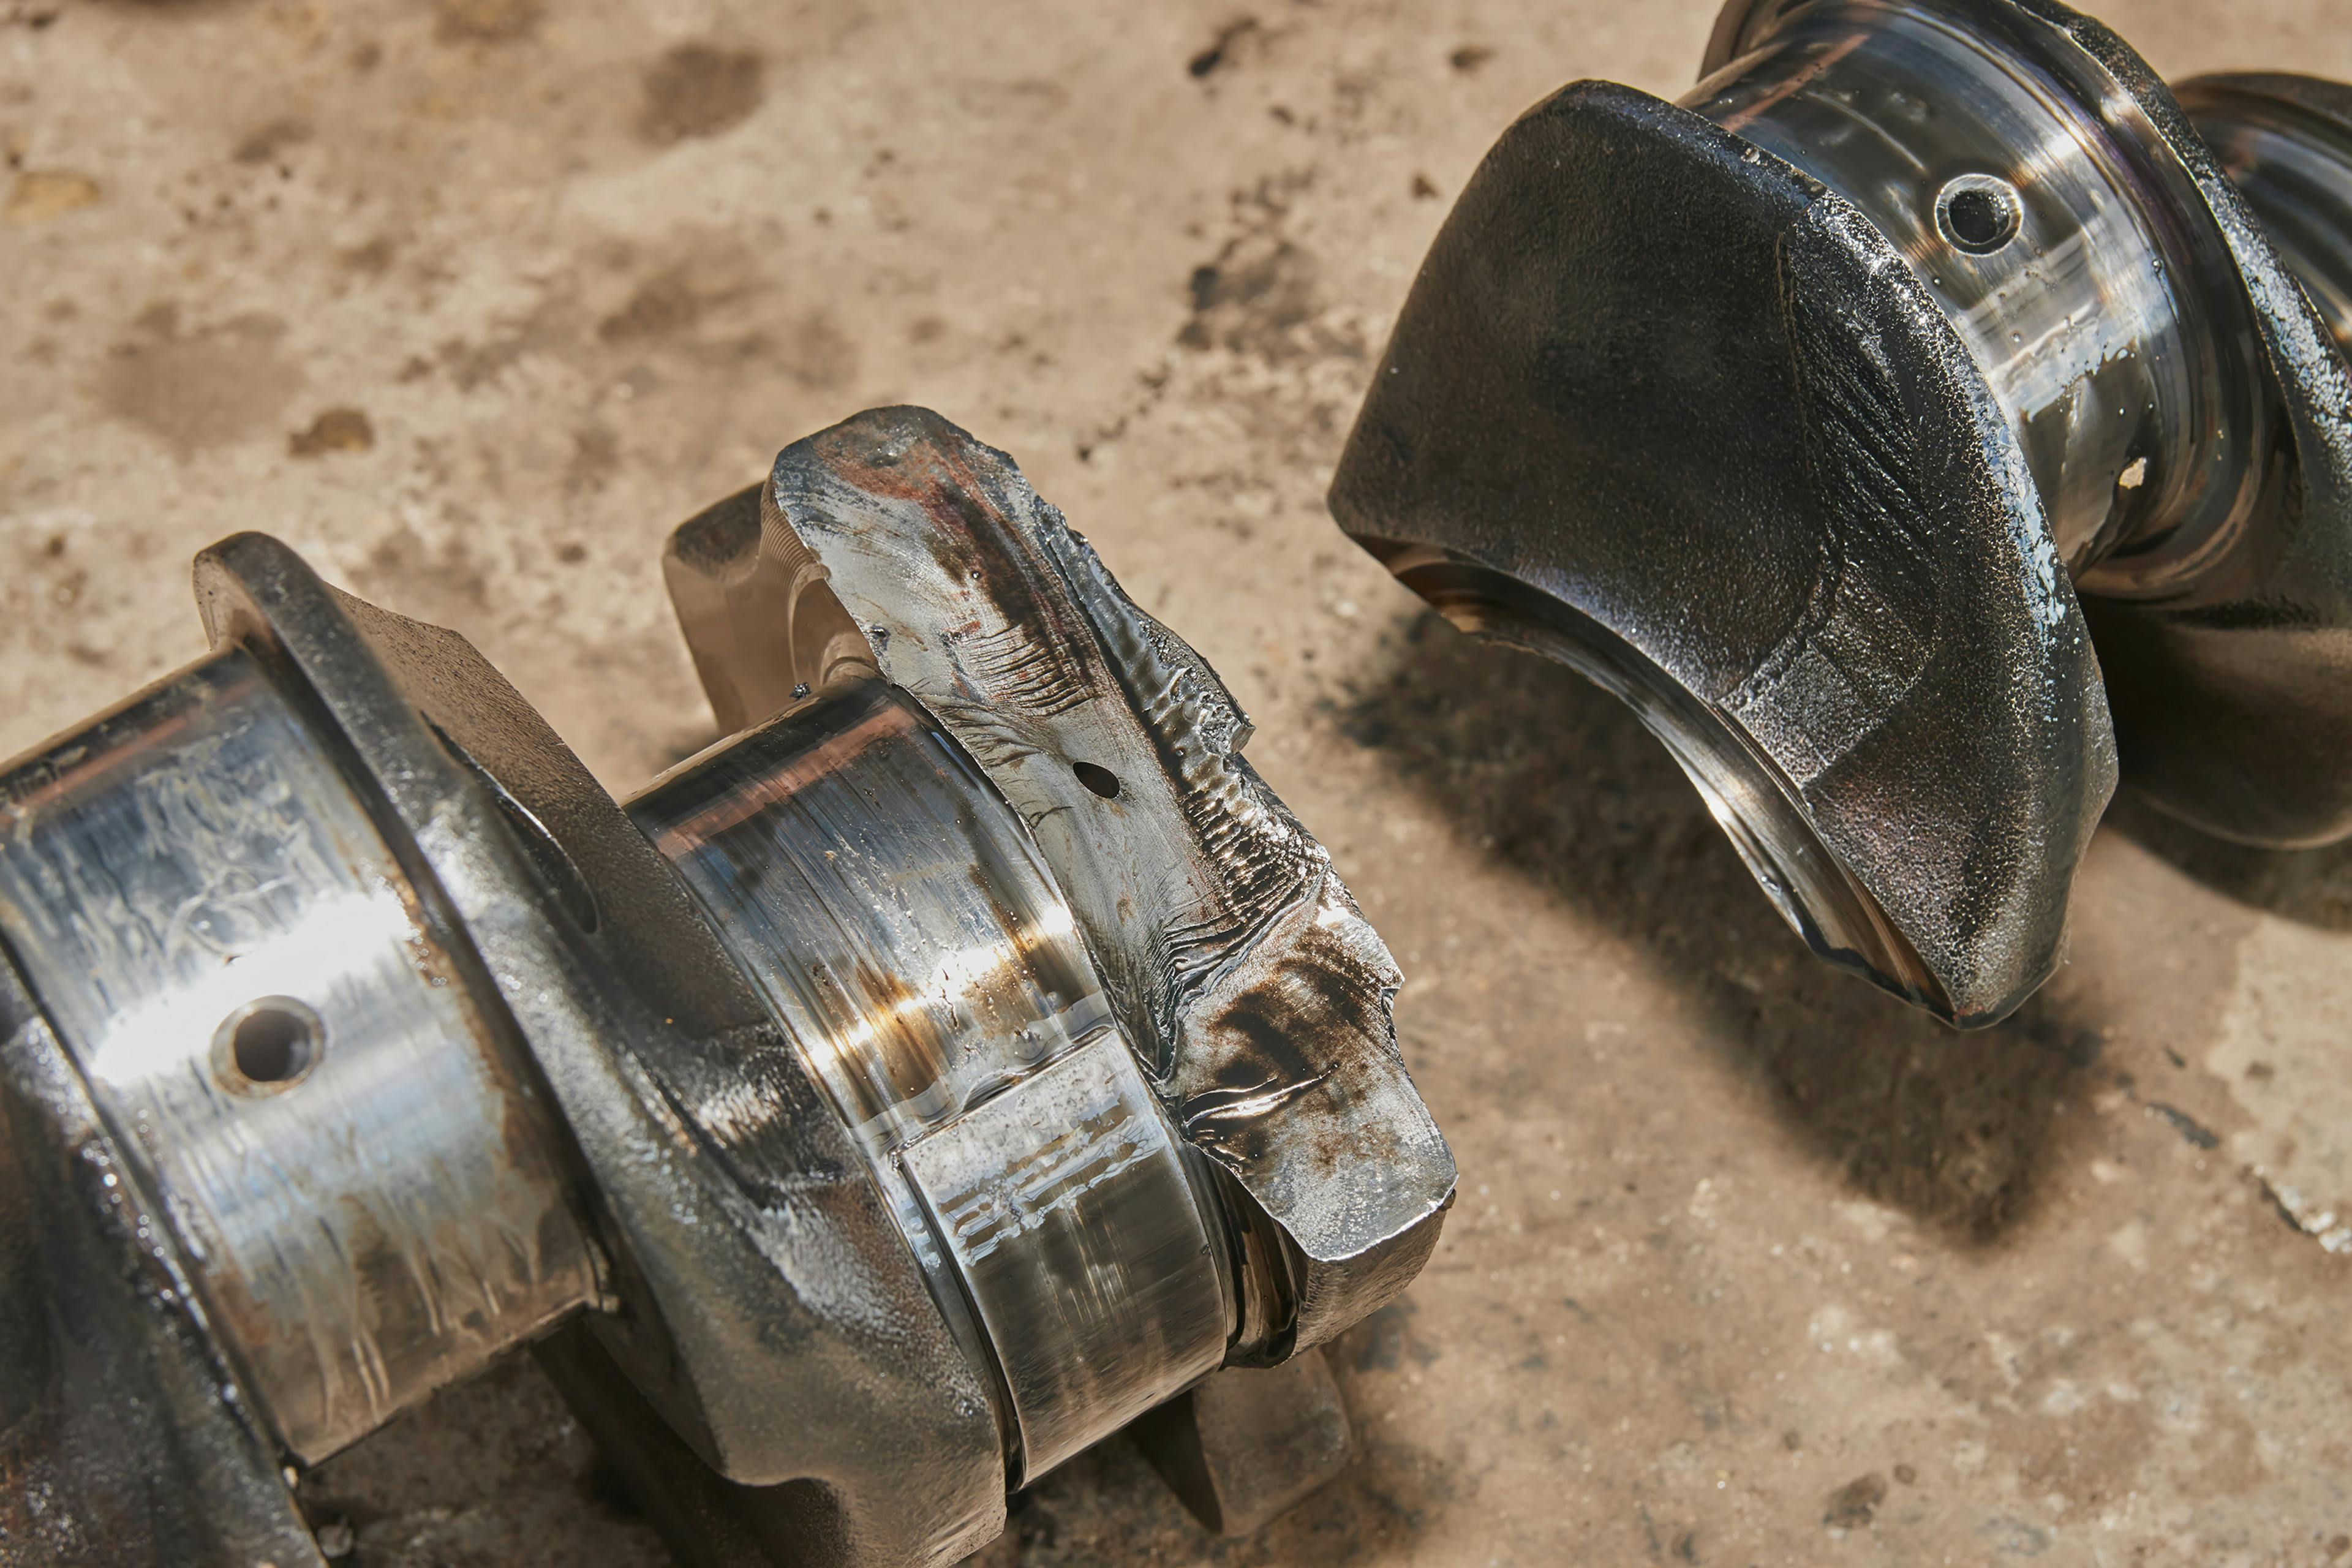 A engine crankshaft broken into two peices